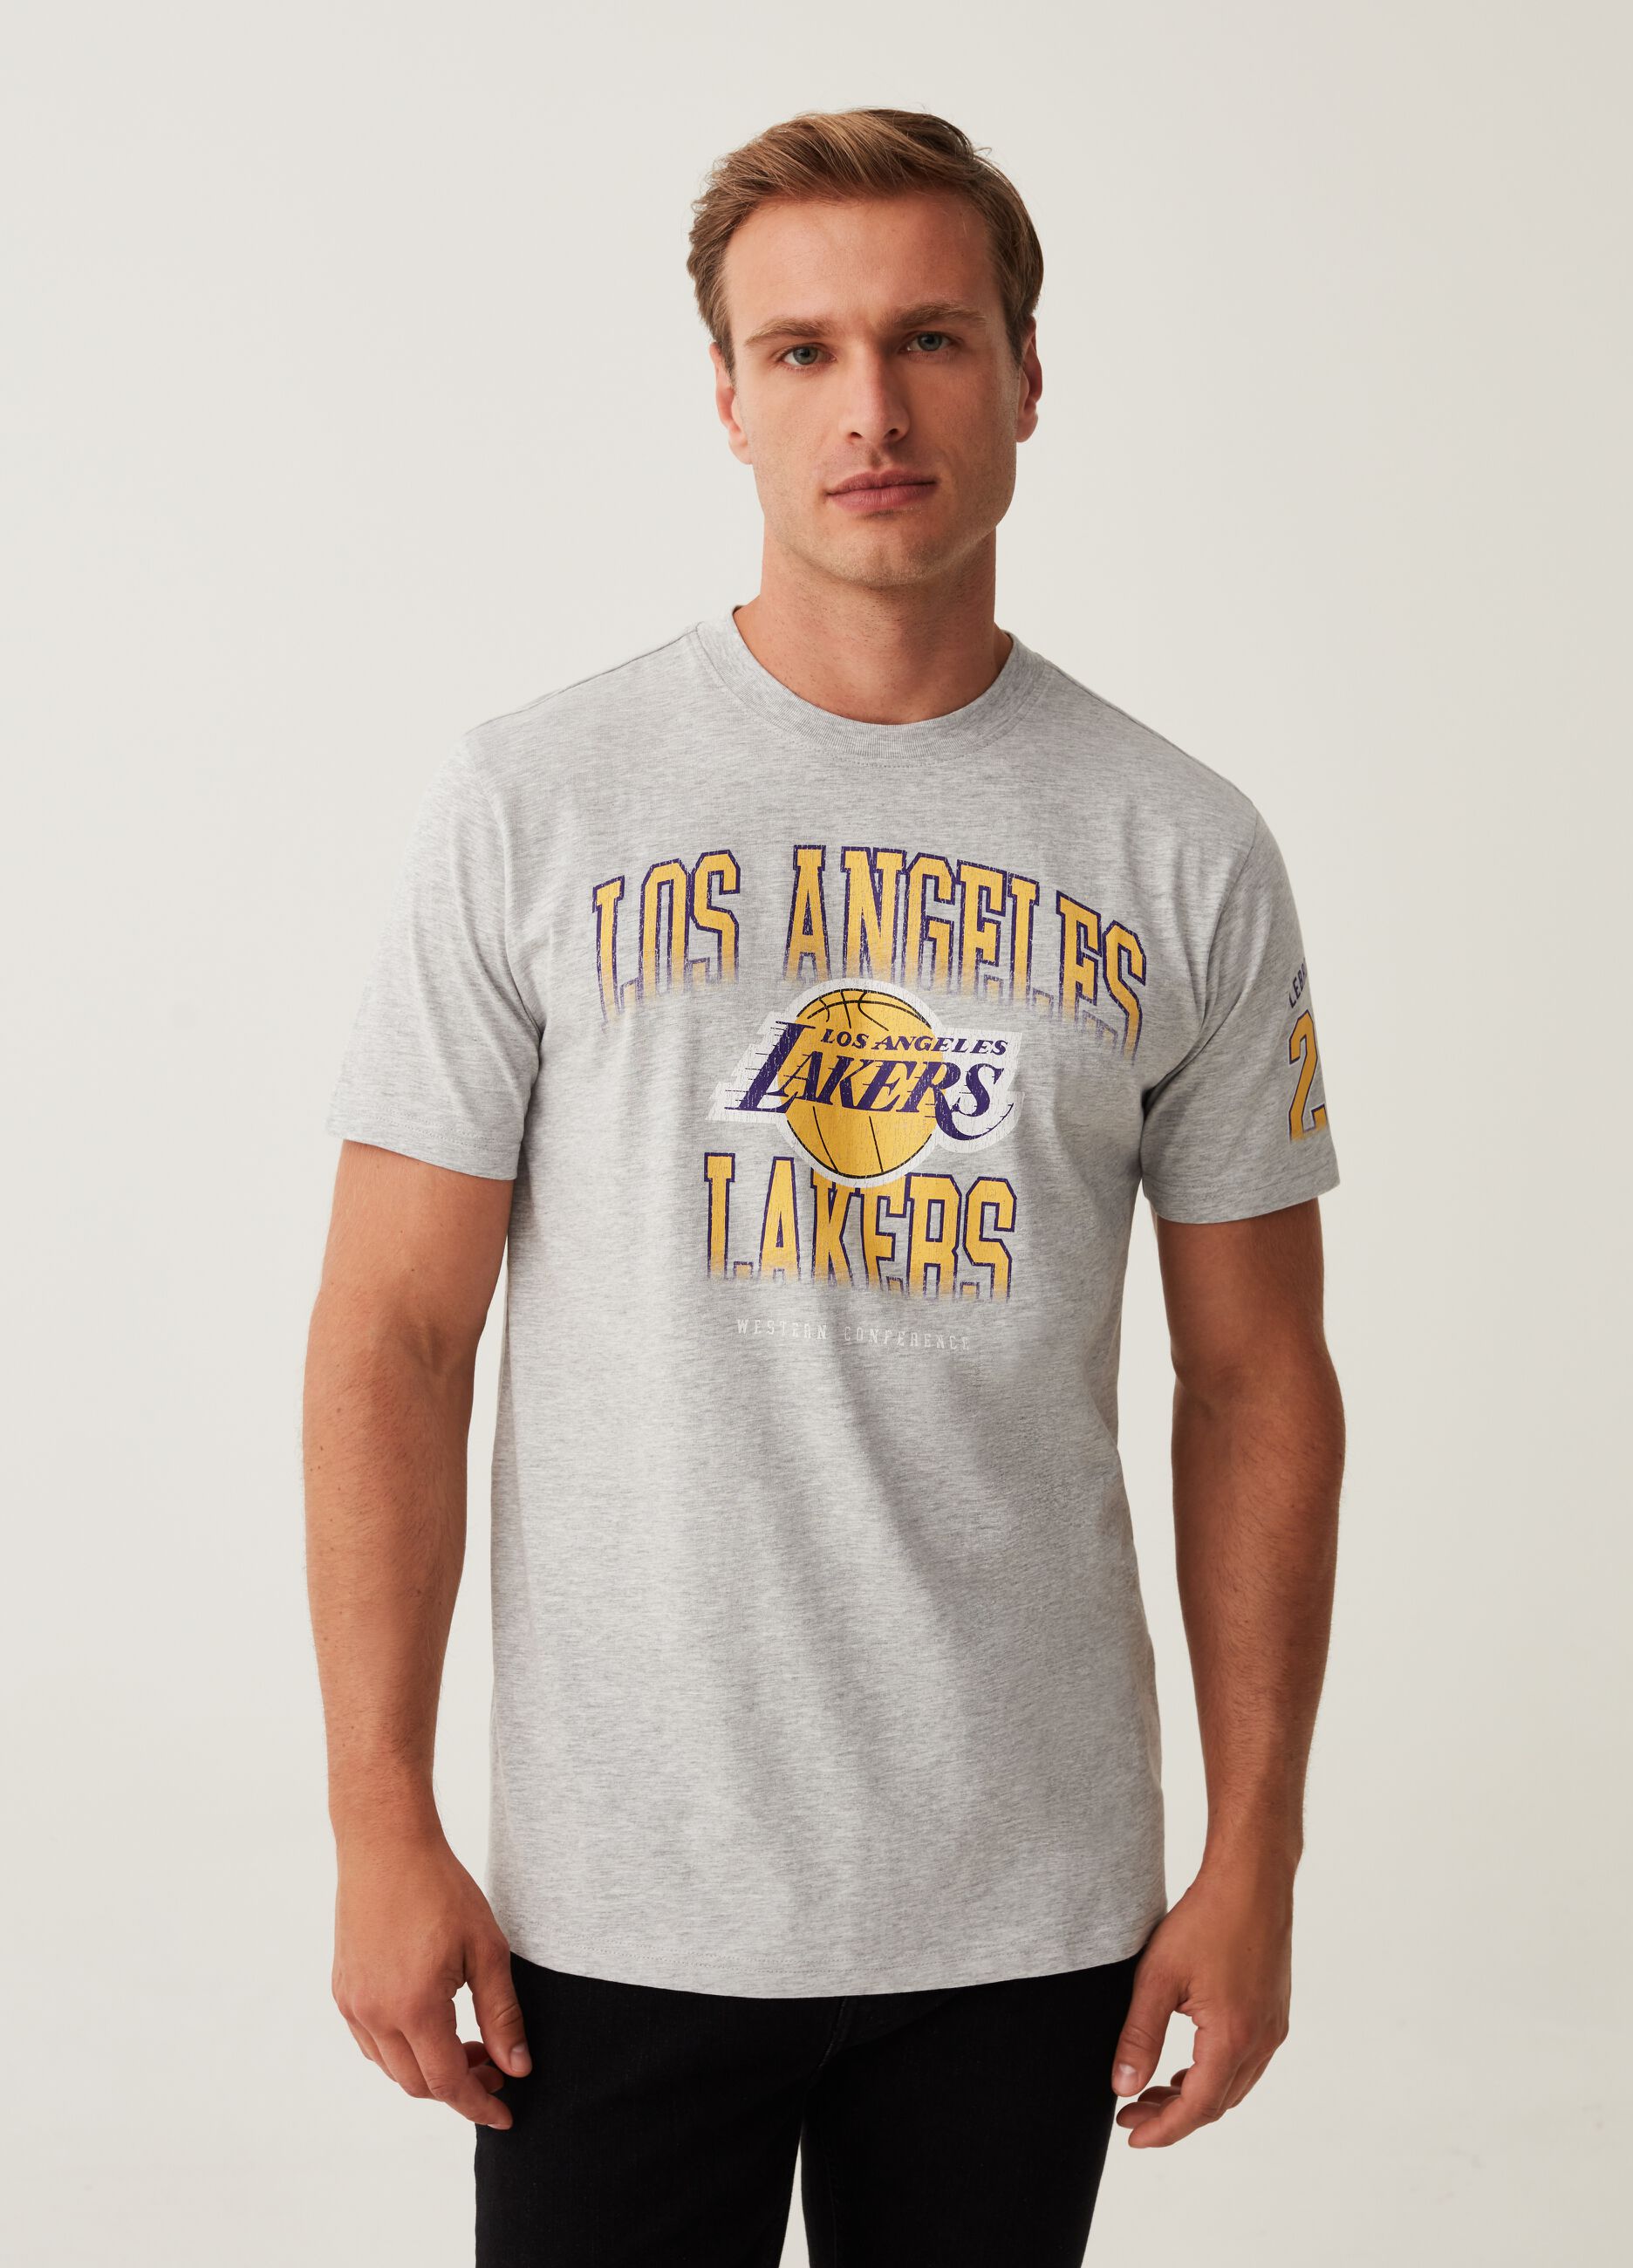 NBA Man's Light Grey Marl T-shirt with NBA Los Angeles Lakers print